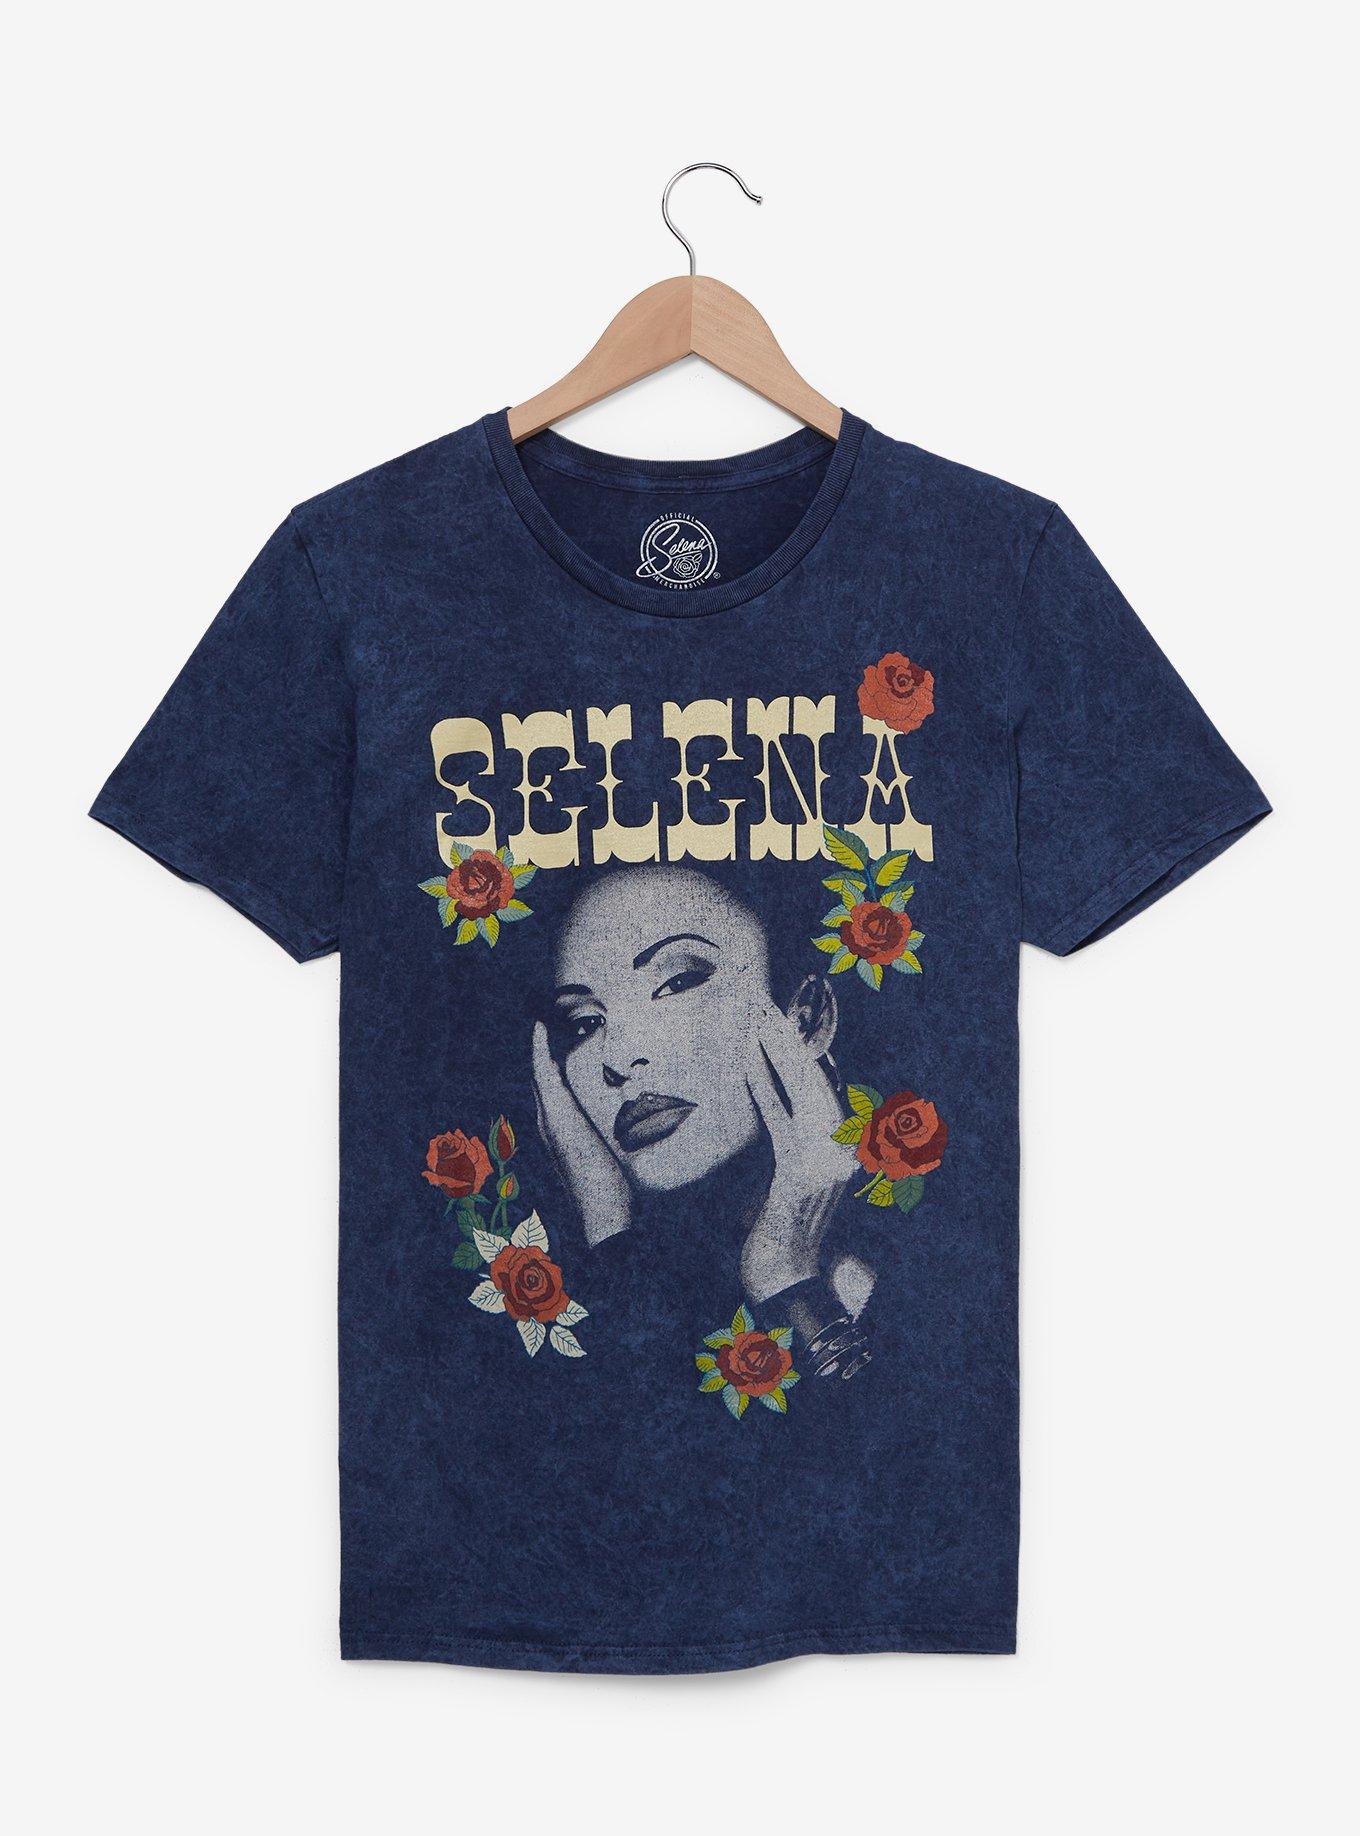 Selena Como la Flor T-Shirt - BoxLunch Exclusive